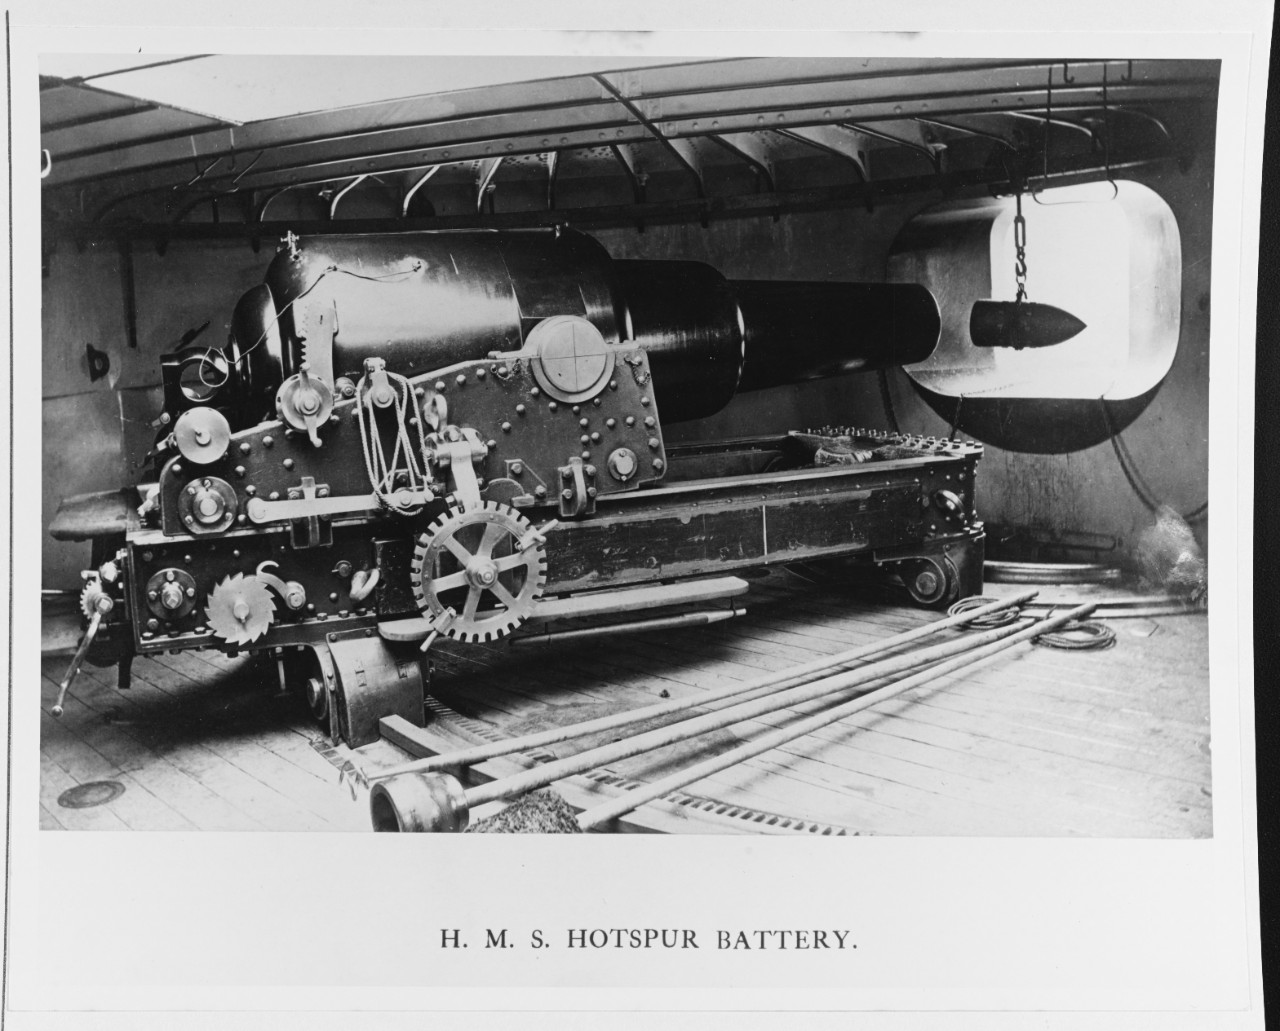 HMS HOTSPUR (BRITISH BATTLESHIP, 1870)